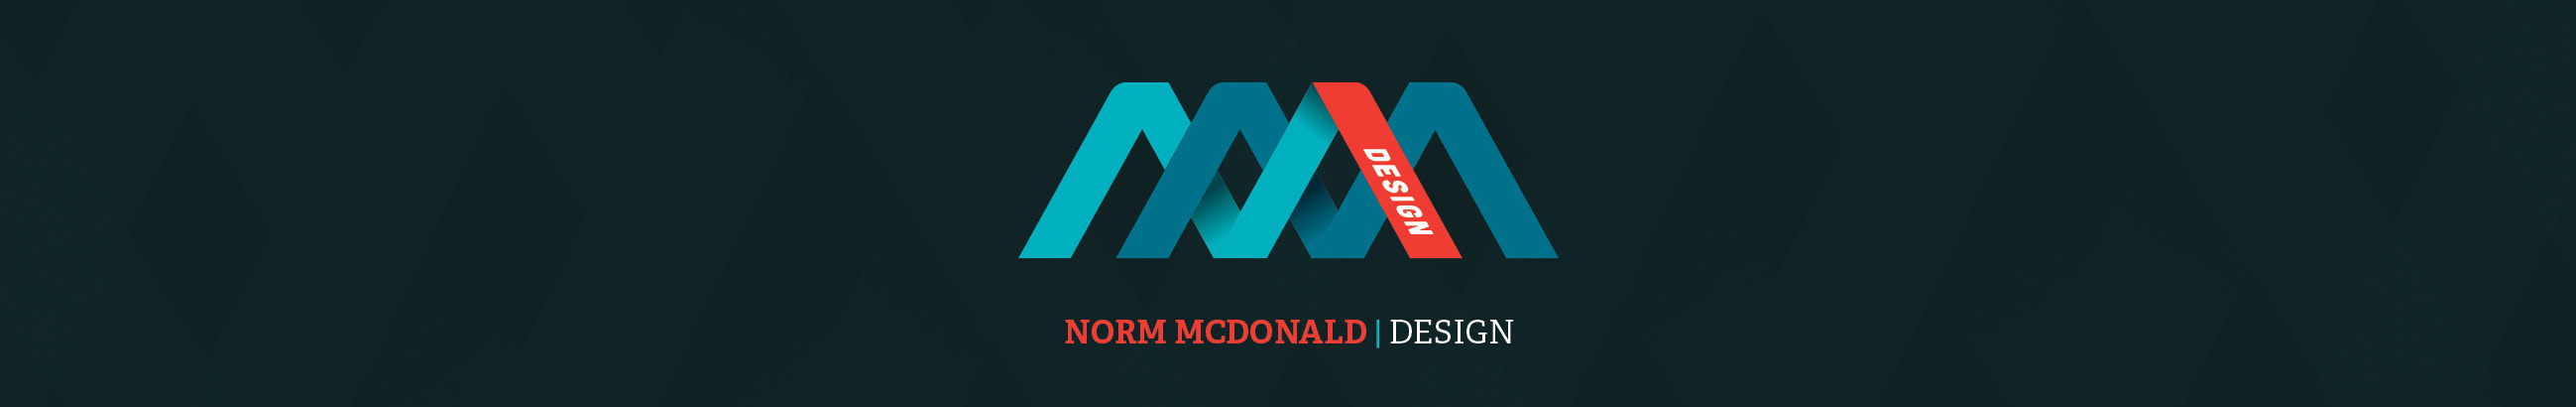 Norm McDonald's profile banner